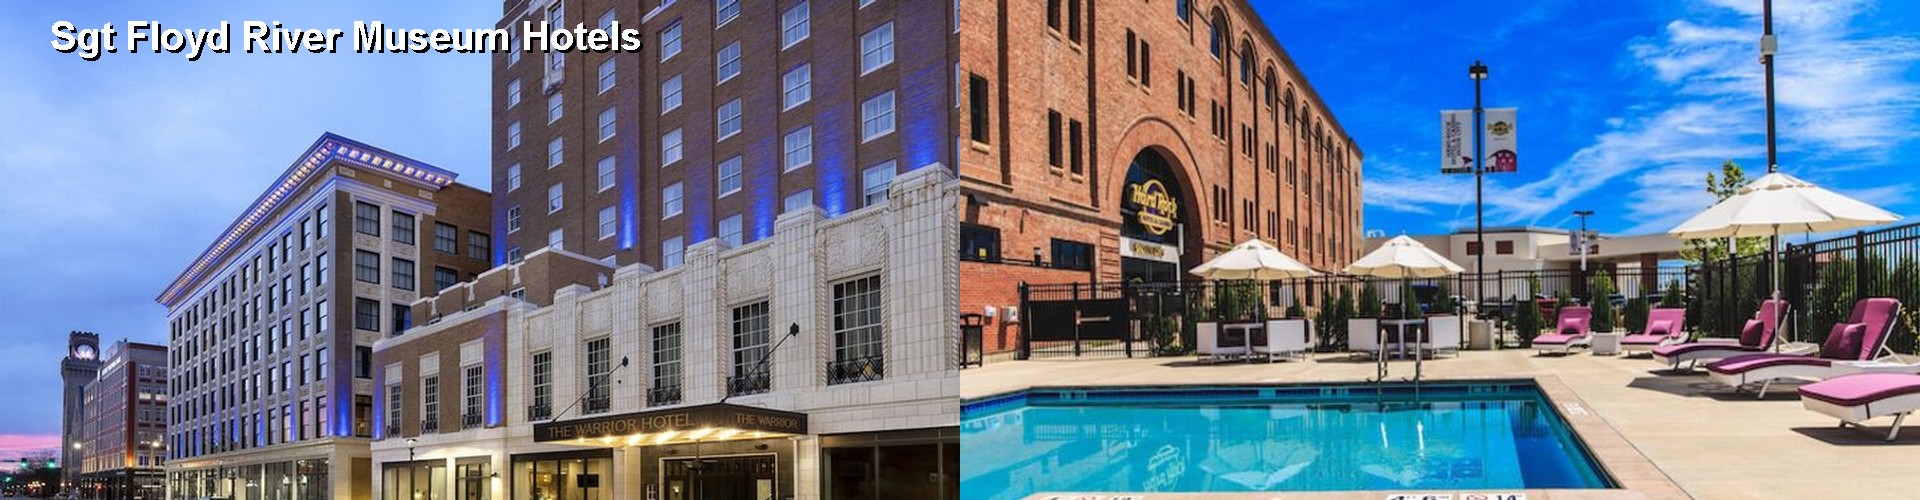 5 Best Hotels near Sgt Floyd River Museum